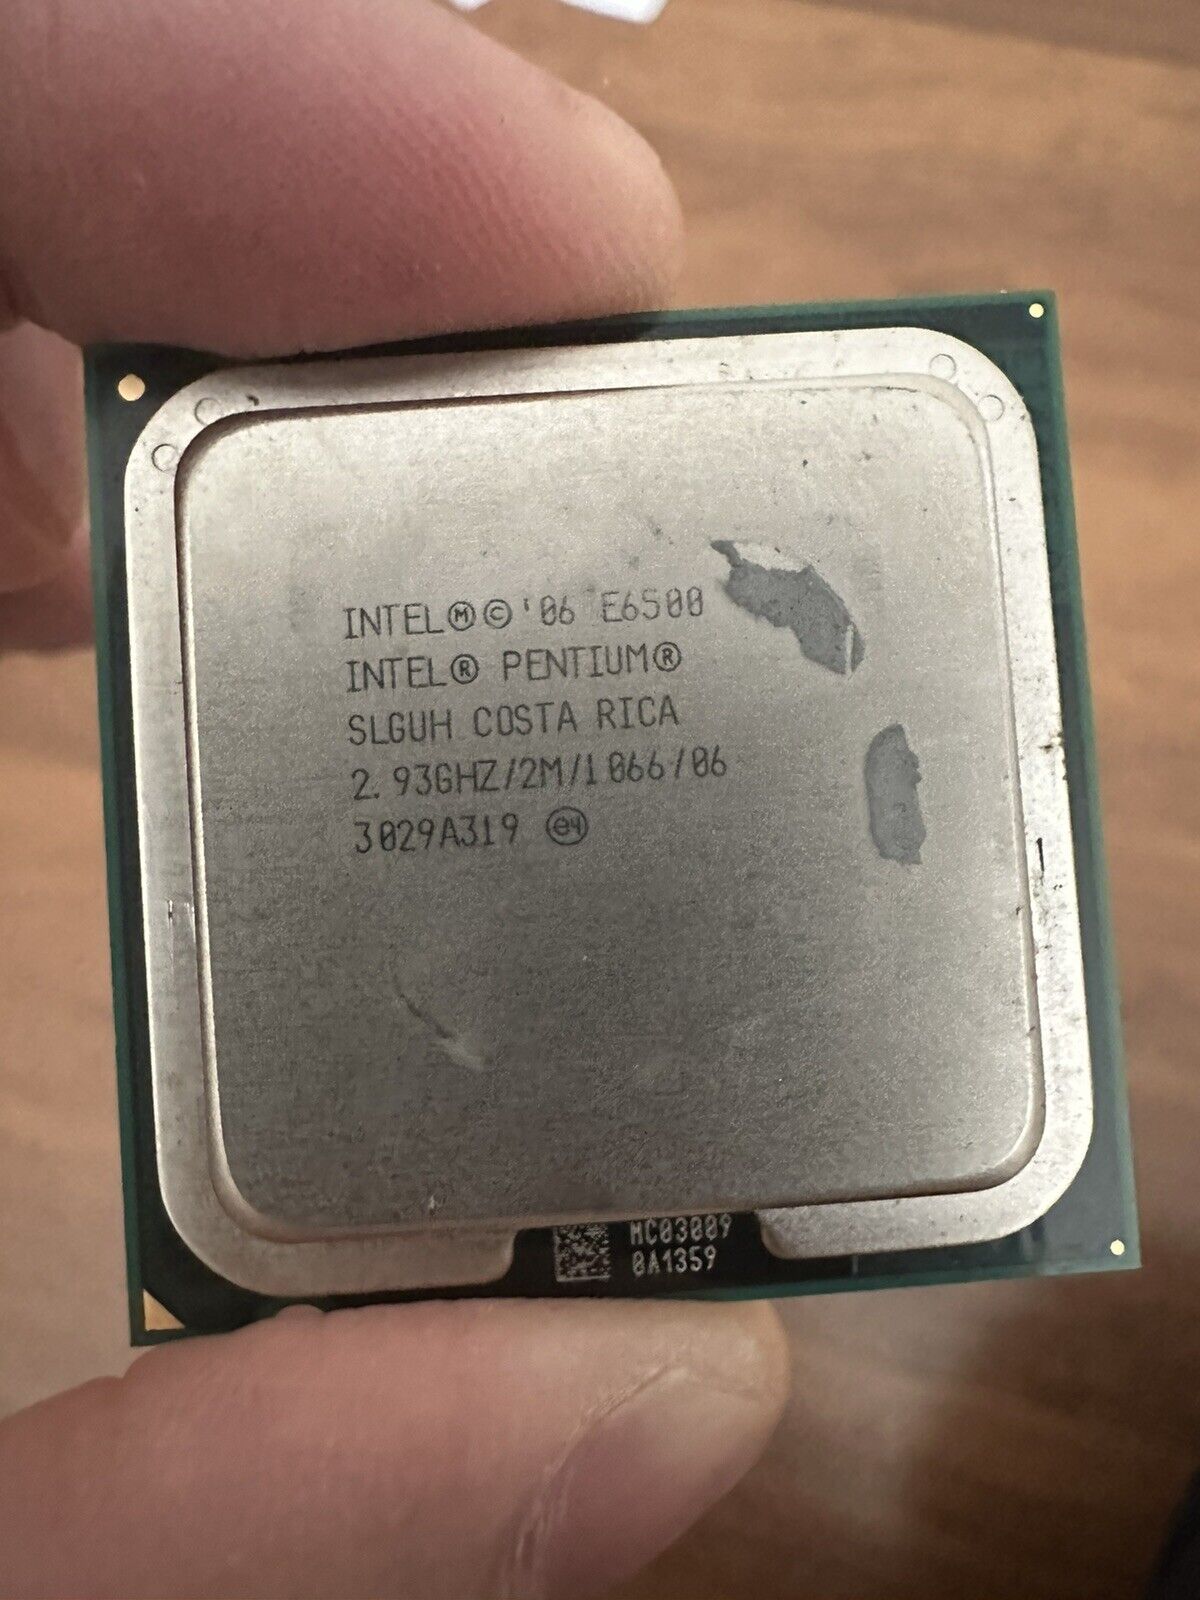 Intel Pentium E6500 2.933 GHz 2.93GHZ/2M/1066, SLGUH Socket 775